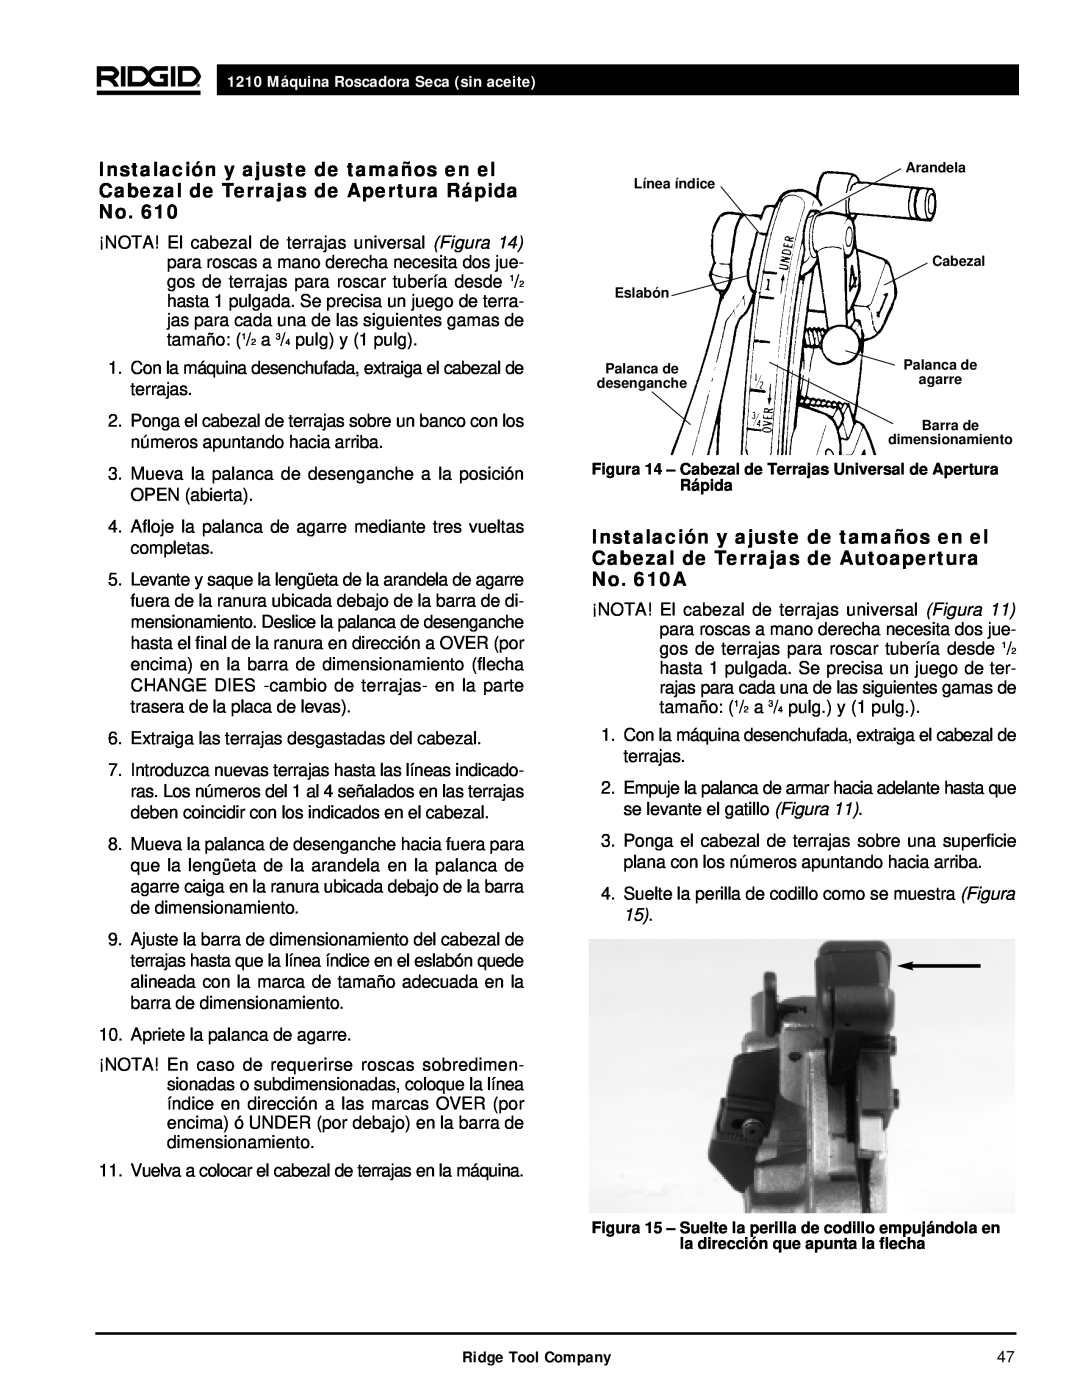 RIDGID 1210 manual Figura 14 - Cabezal de Terrajas Universal de Apertura Rápida, Arandela Línea índice Cabezal Eslabón 